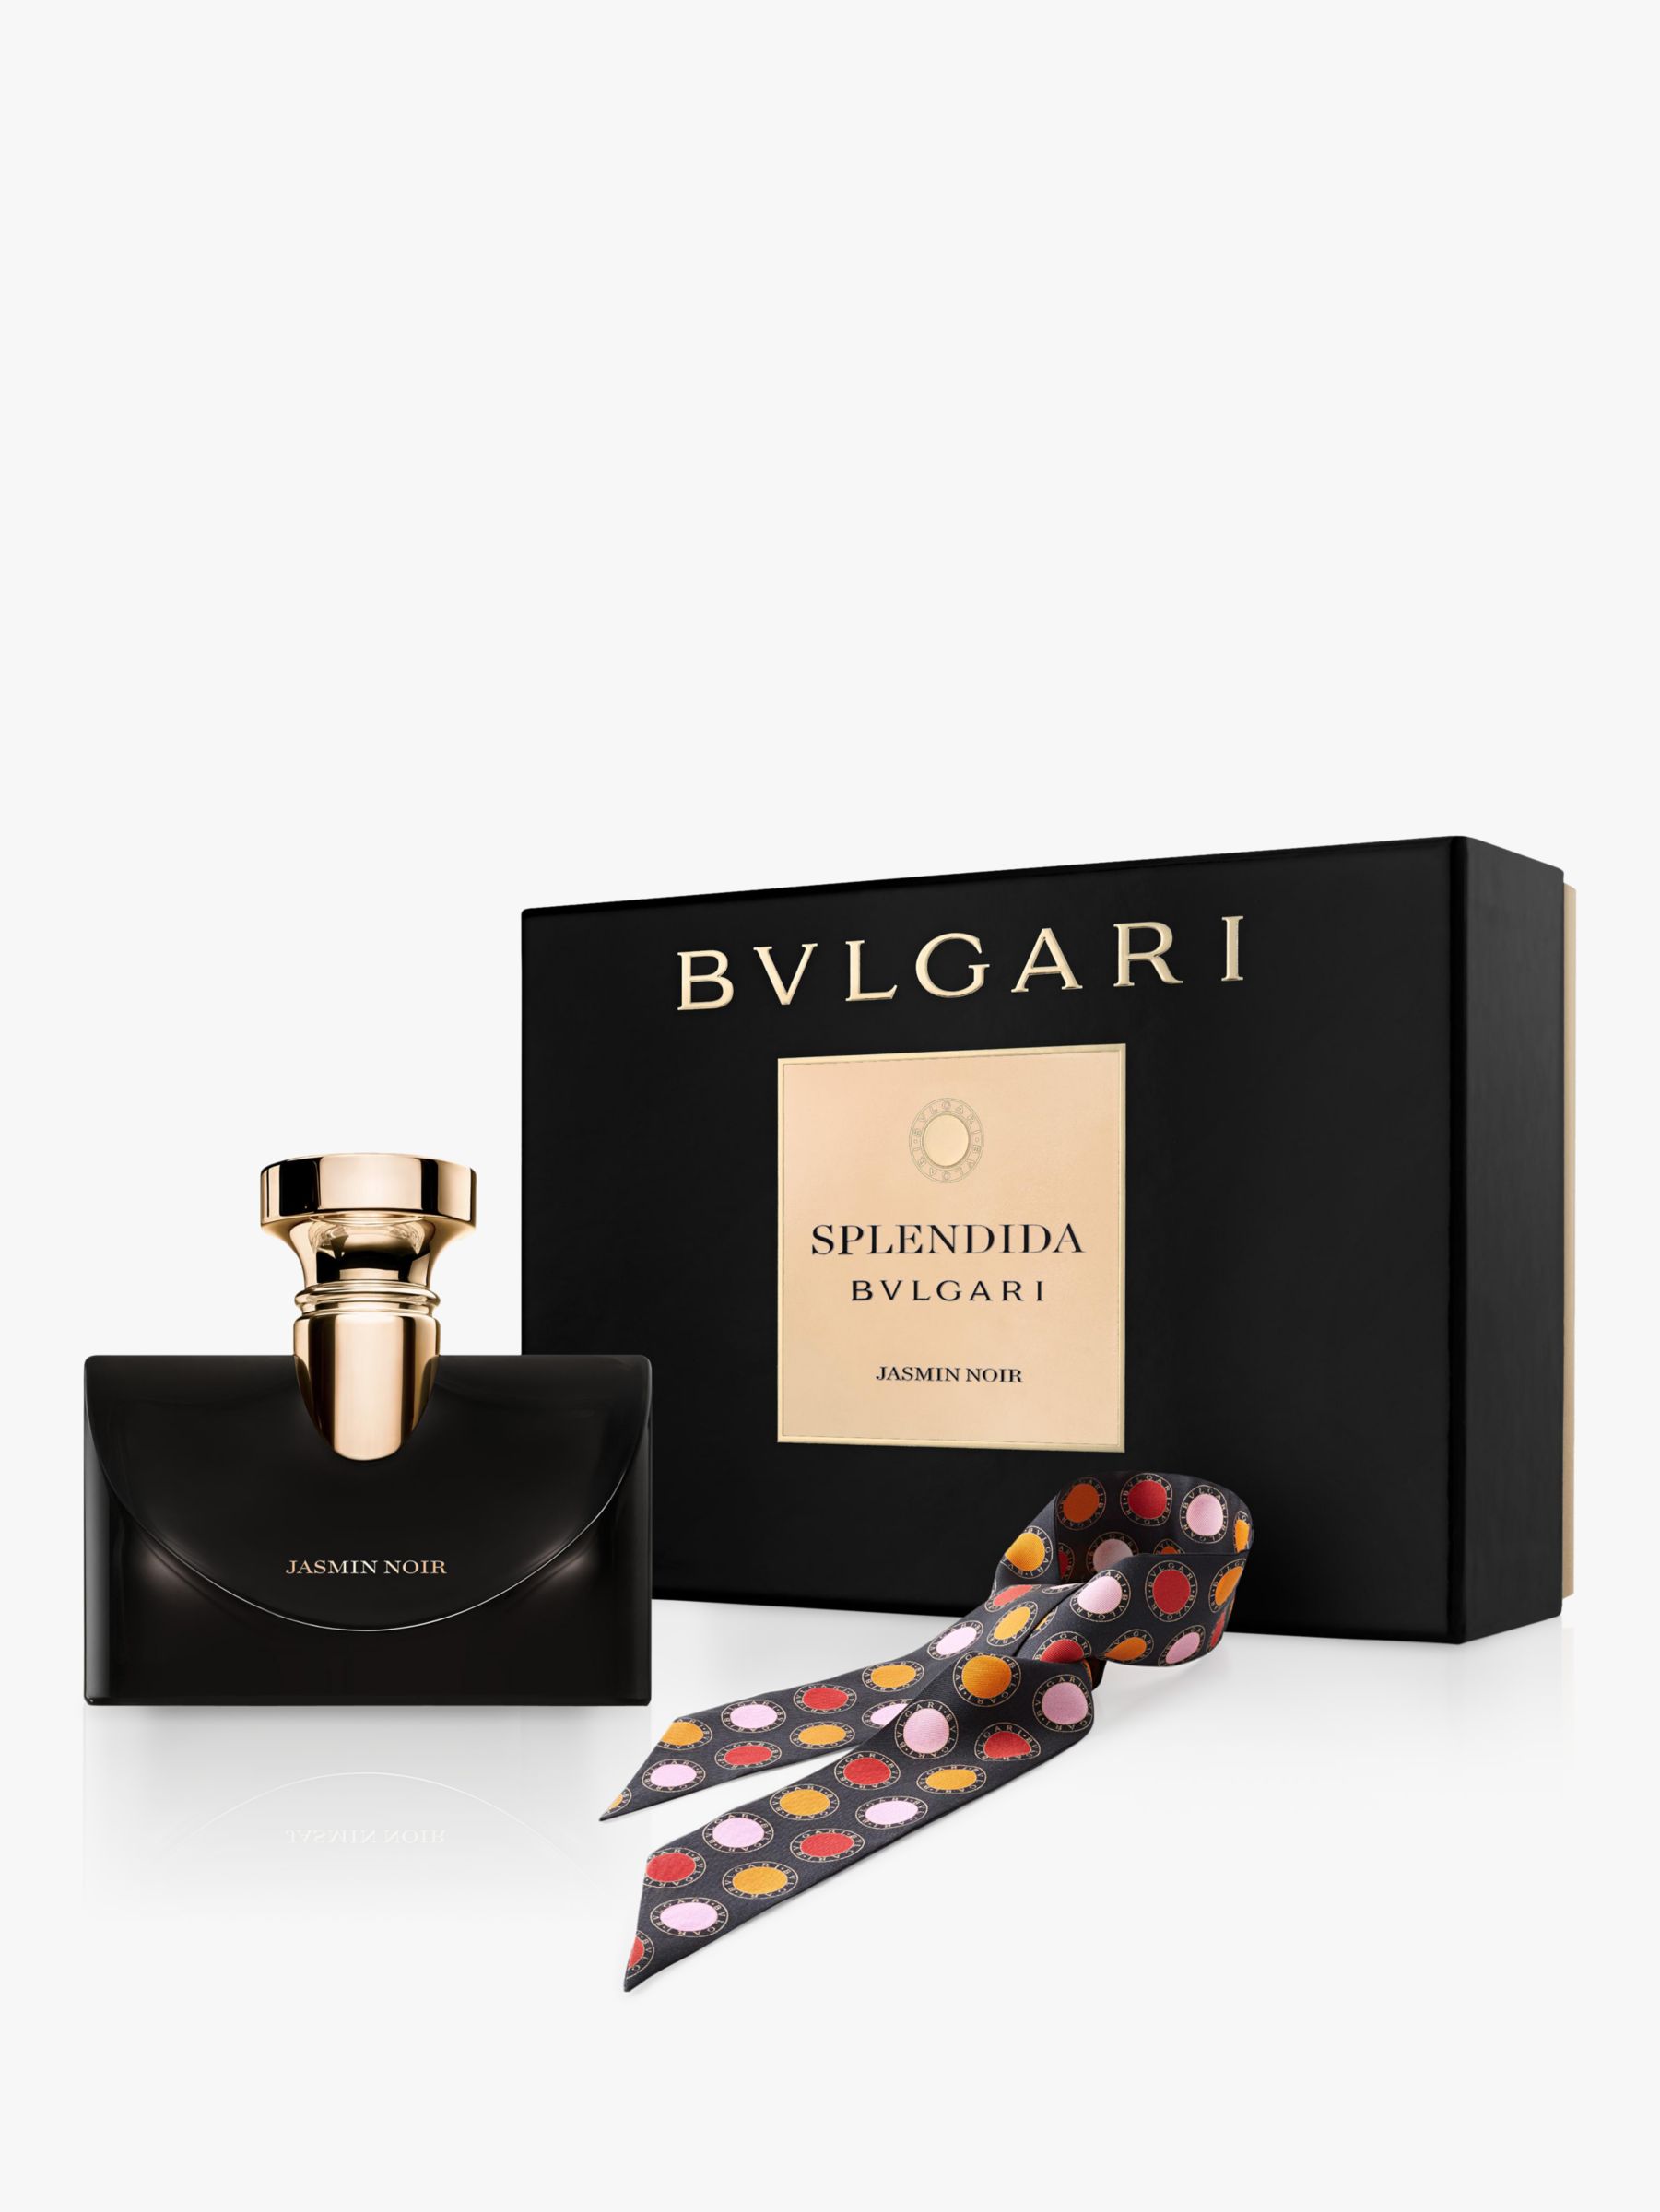 bvlgari fragrance sets